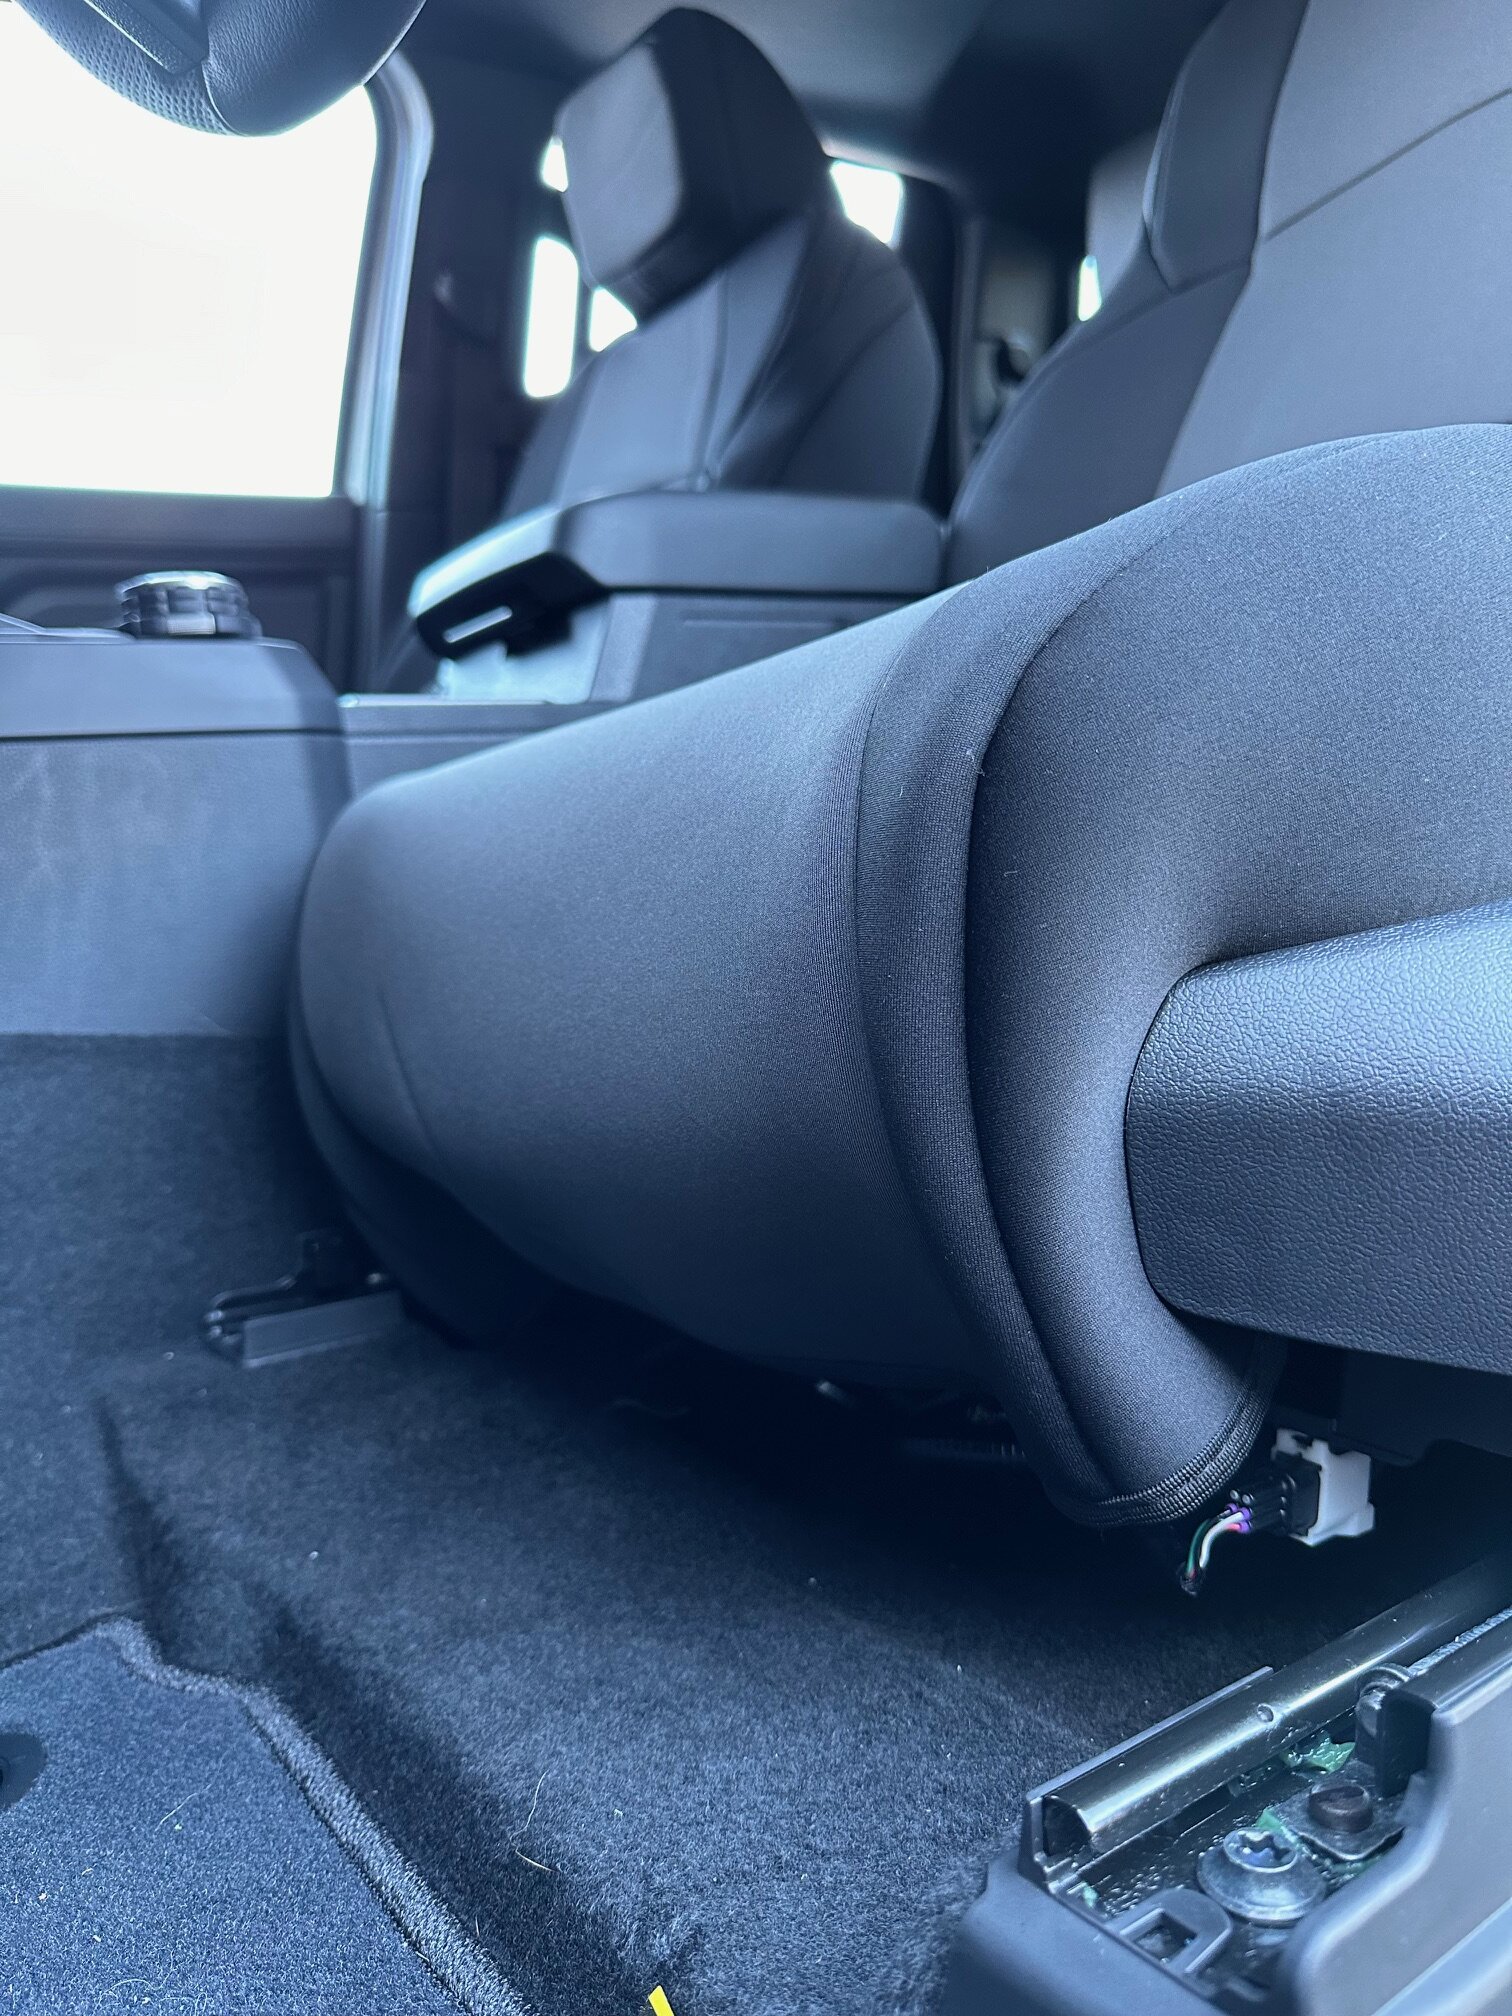 2024 Tacoma Coverking custom neoprene seat cover review IMG_9164